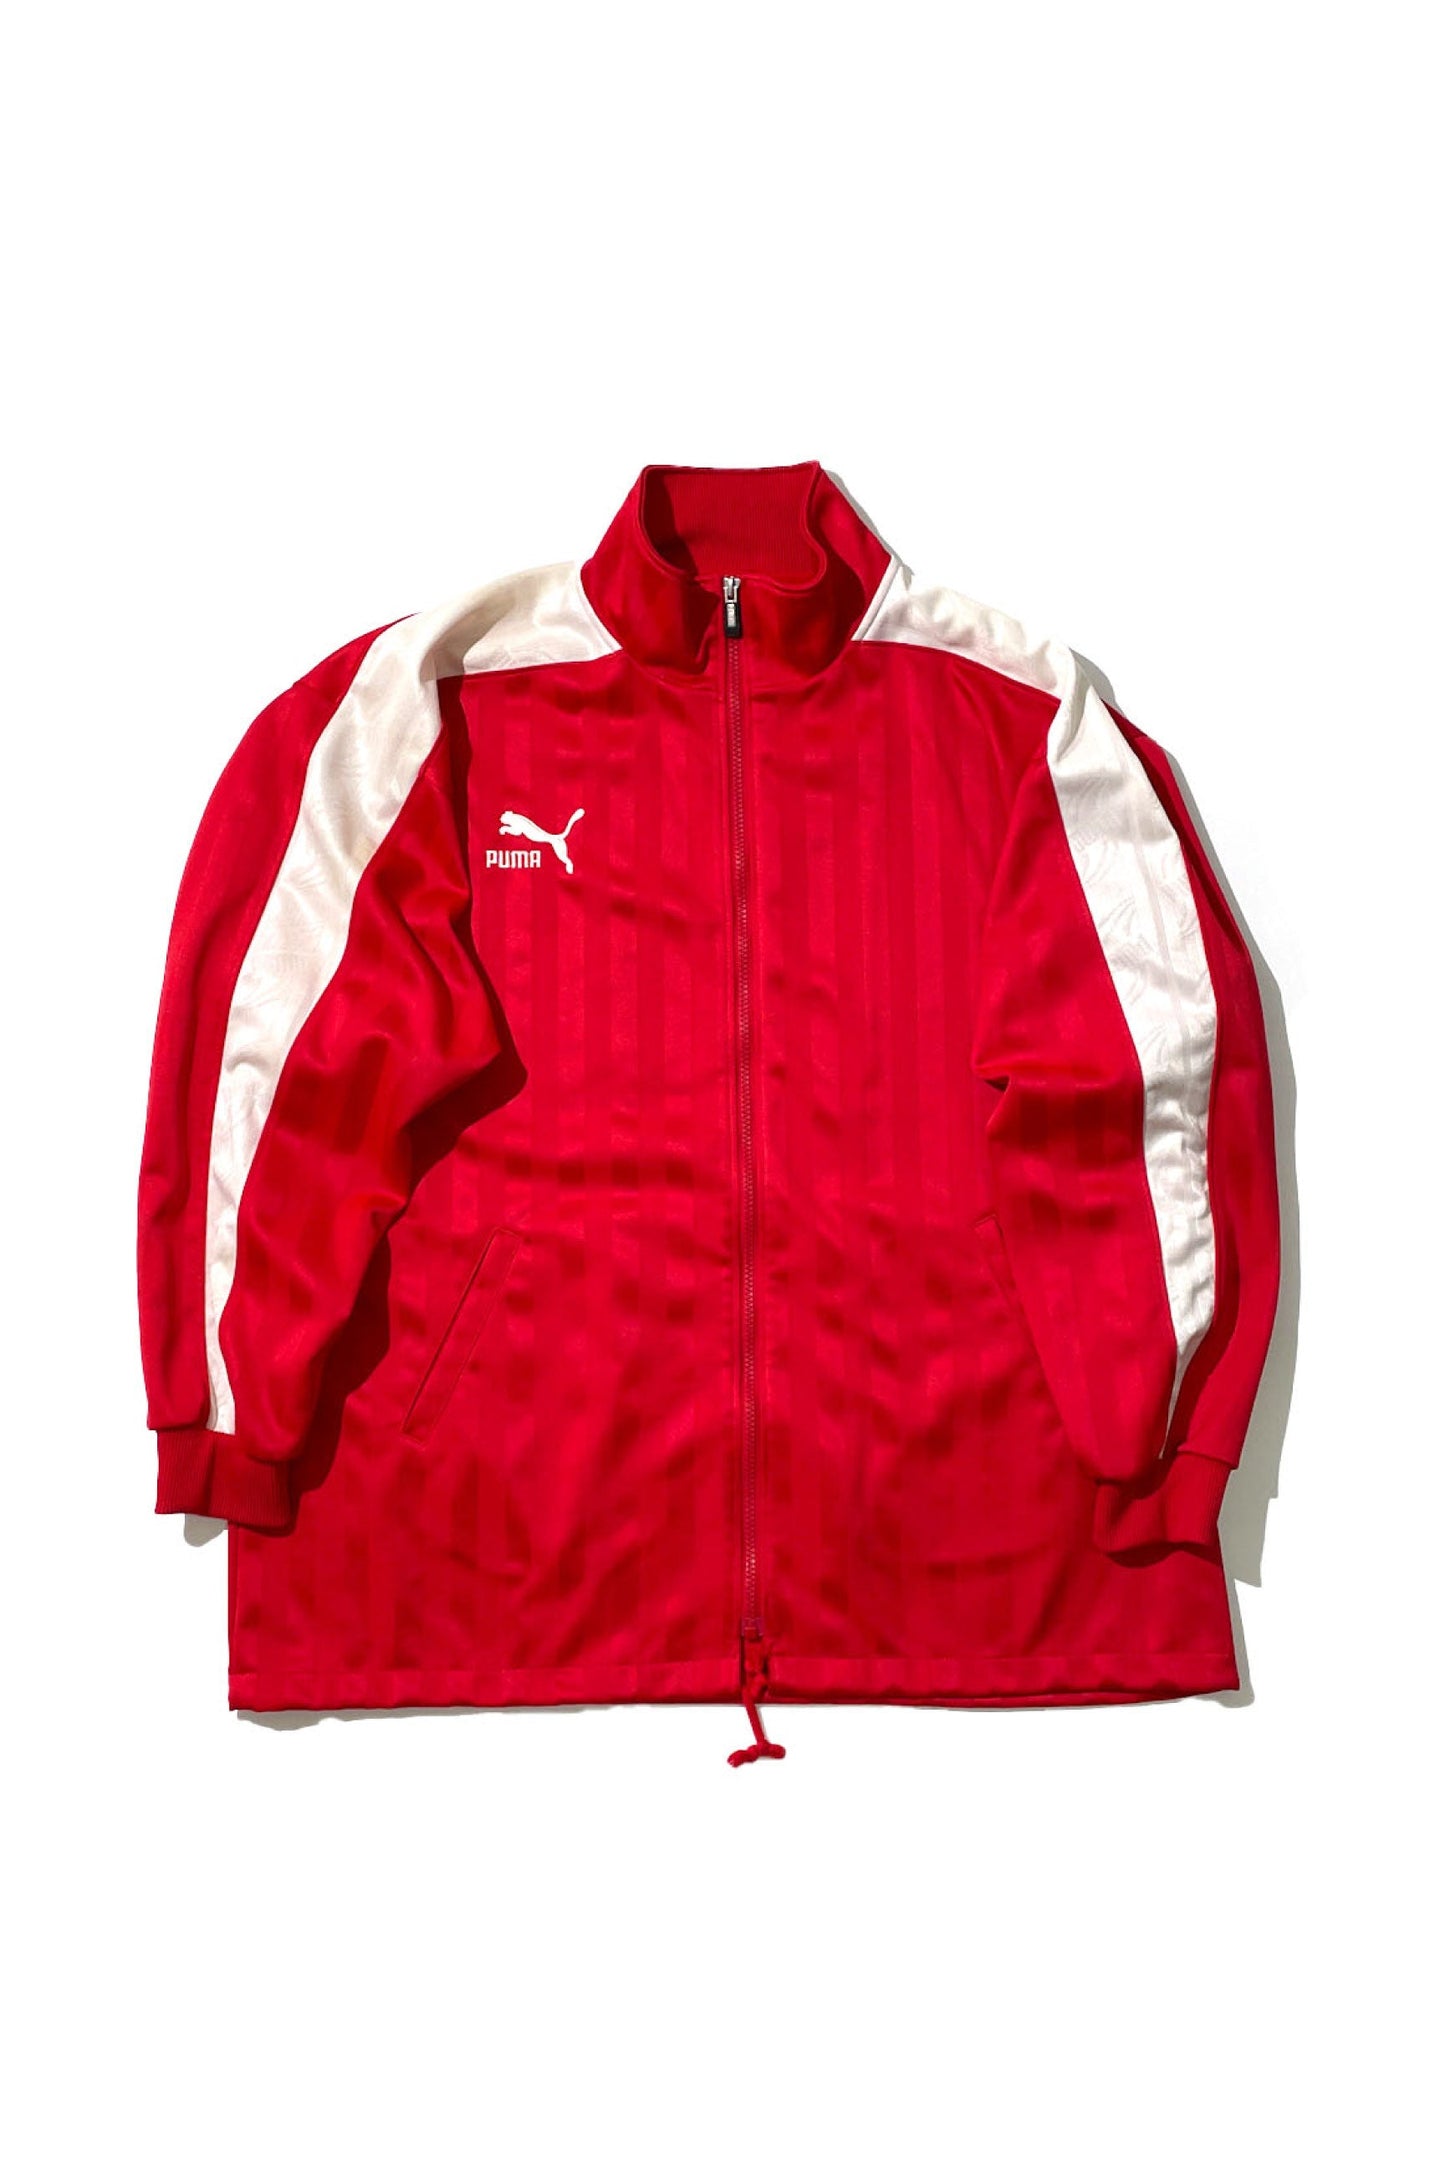 90's~00's PUMA track jacket